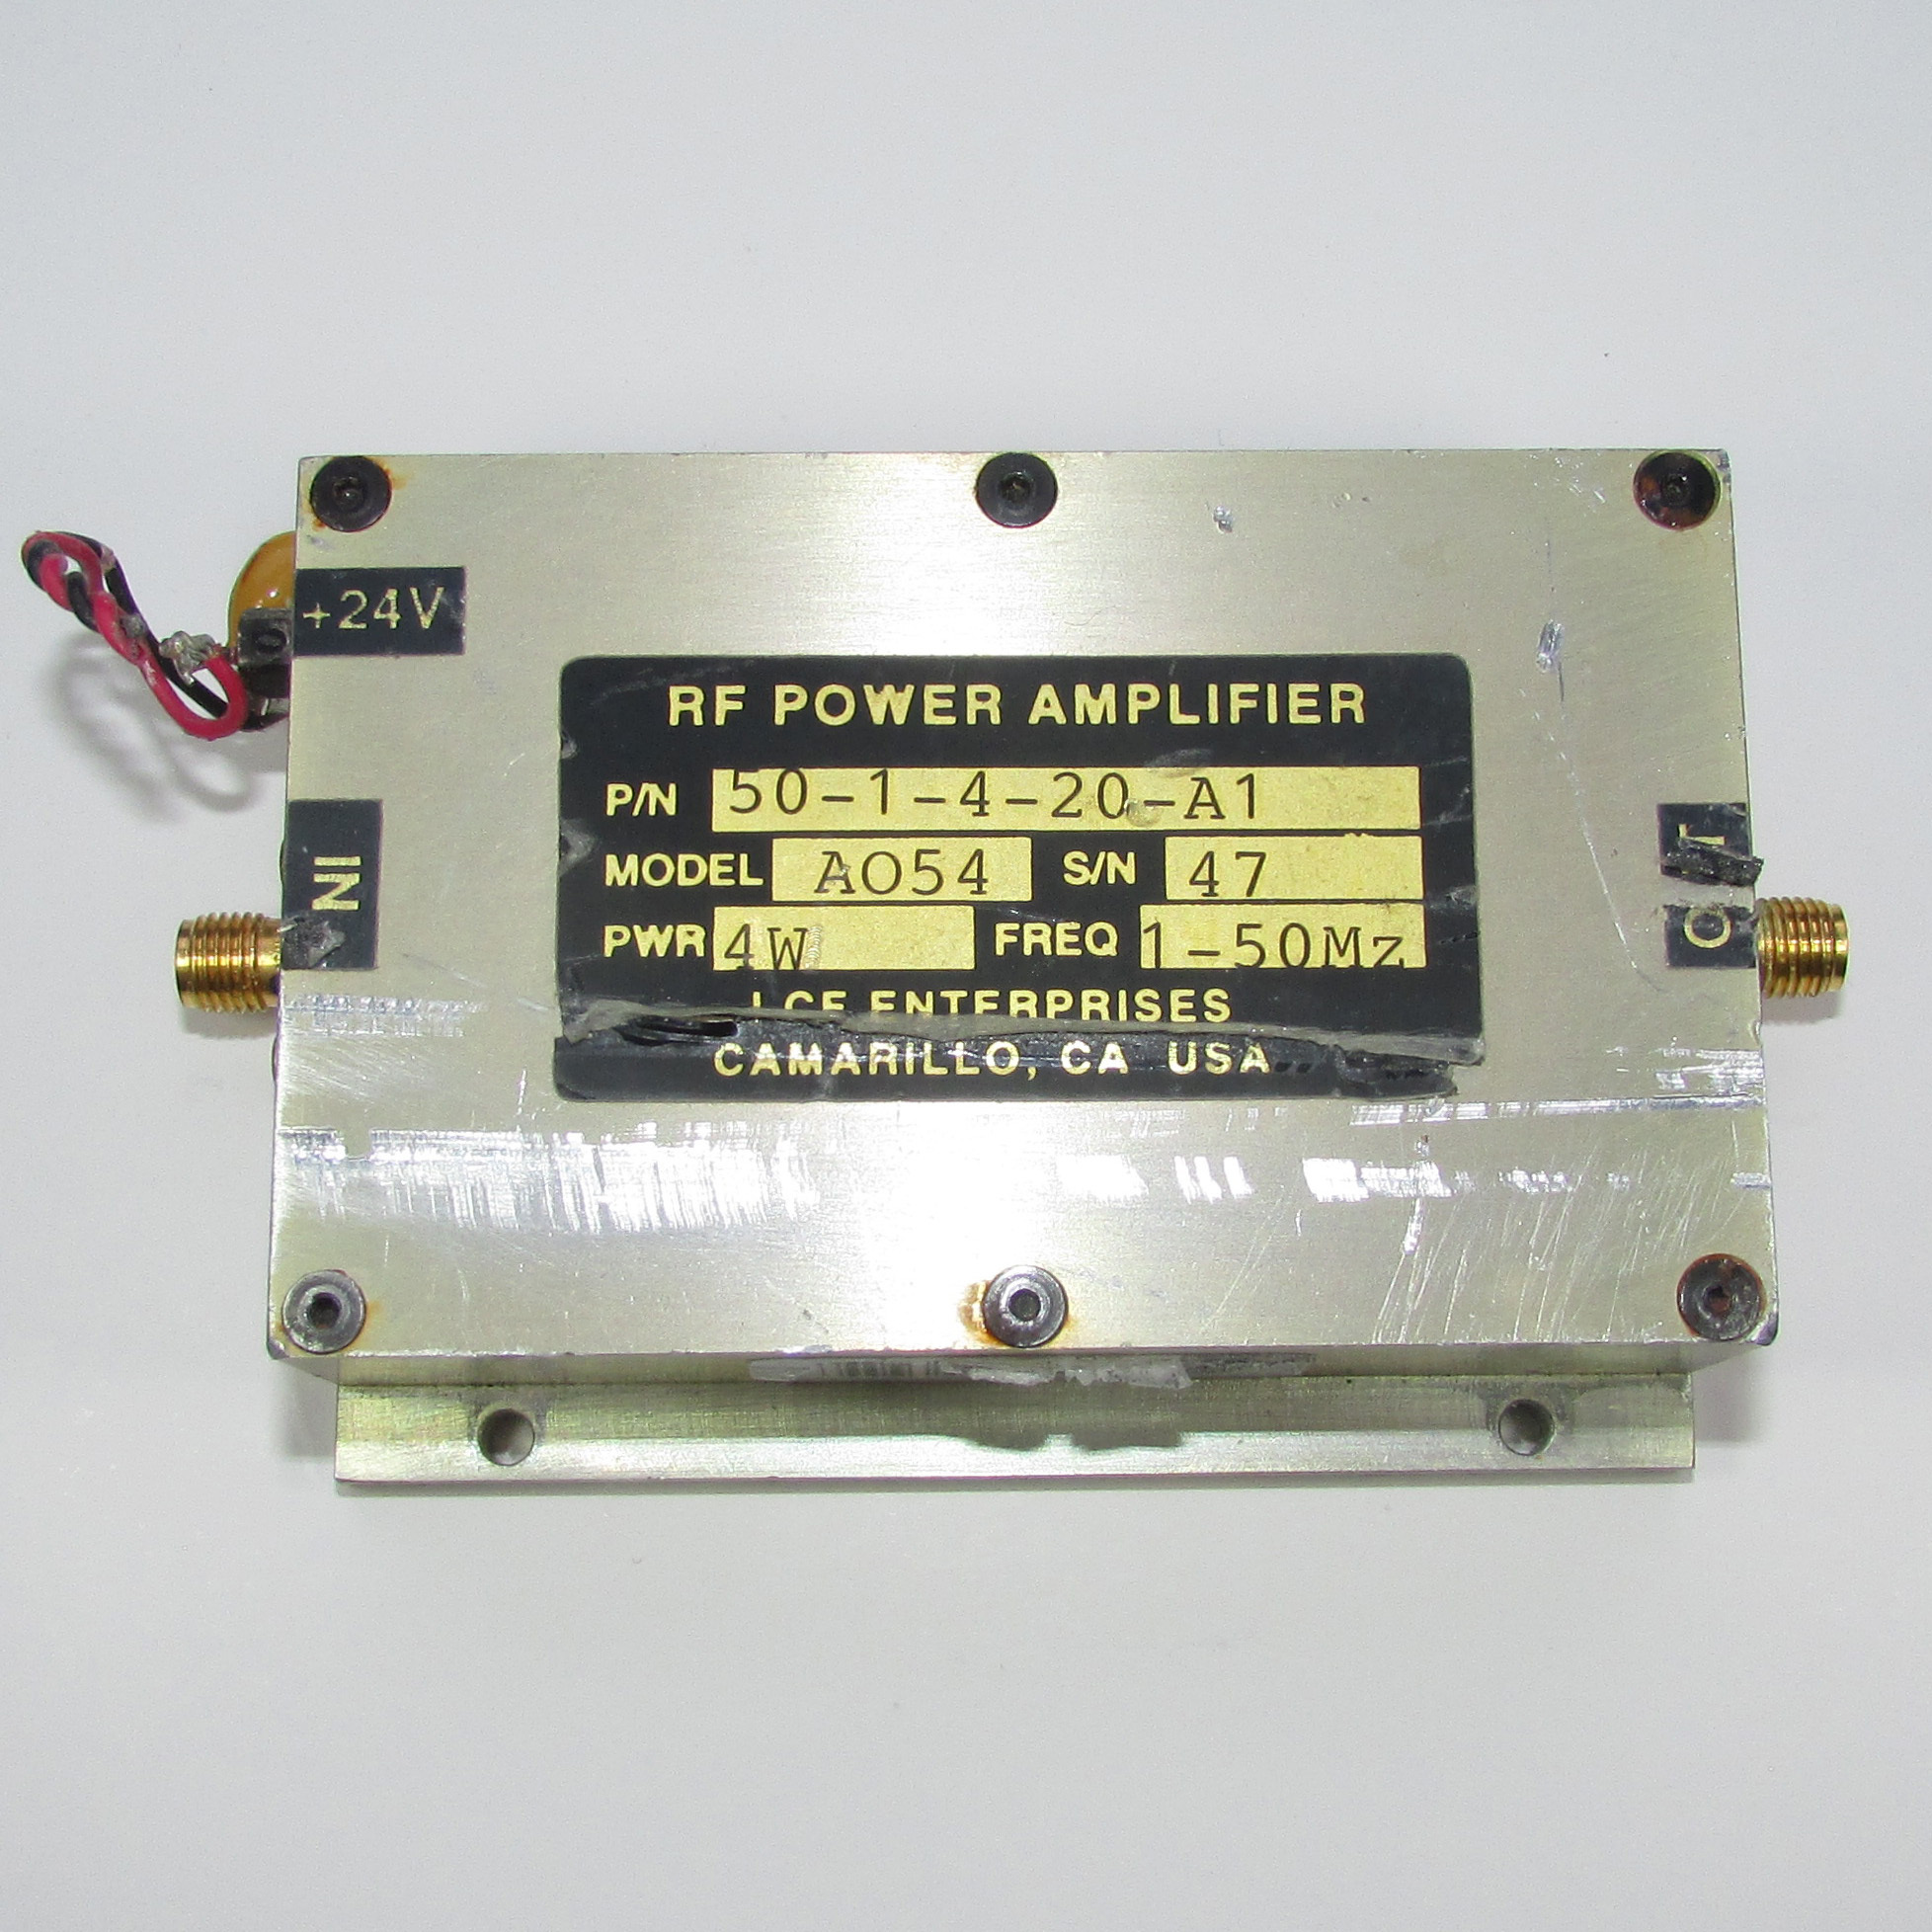 American LCF A054 1-50MHz 20dB 4W 24V SMA RF coaxial amplifier (power amplifier)